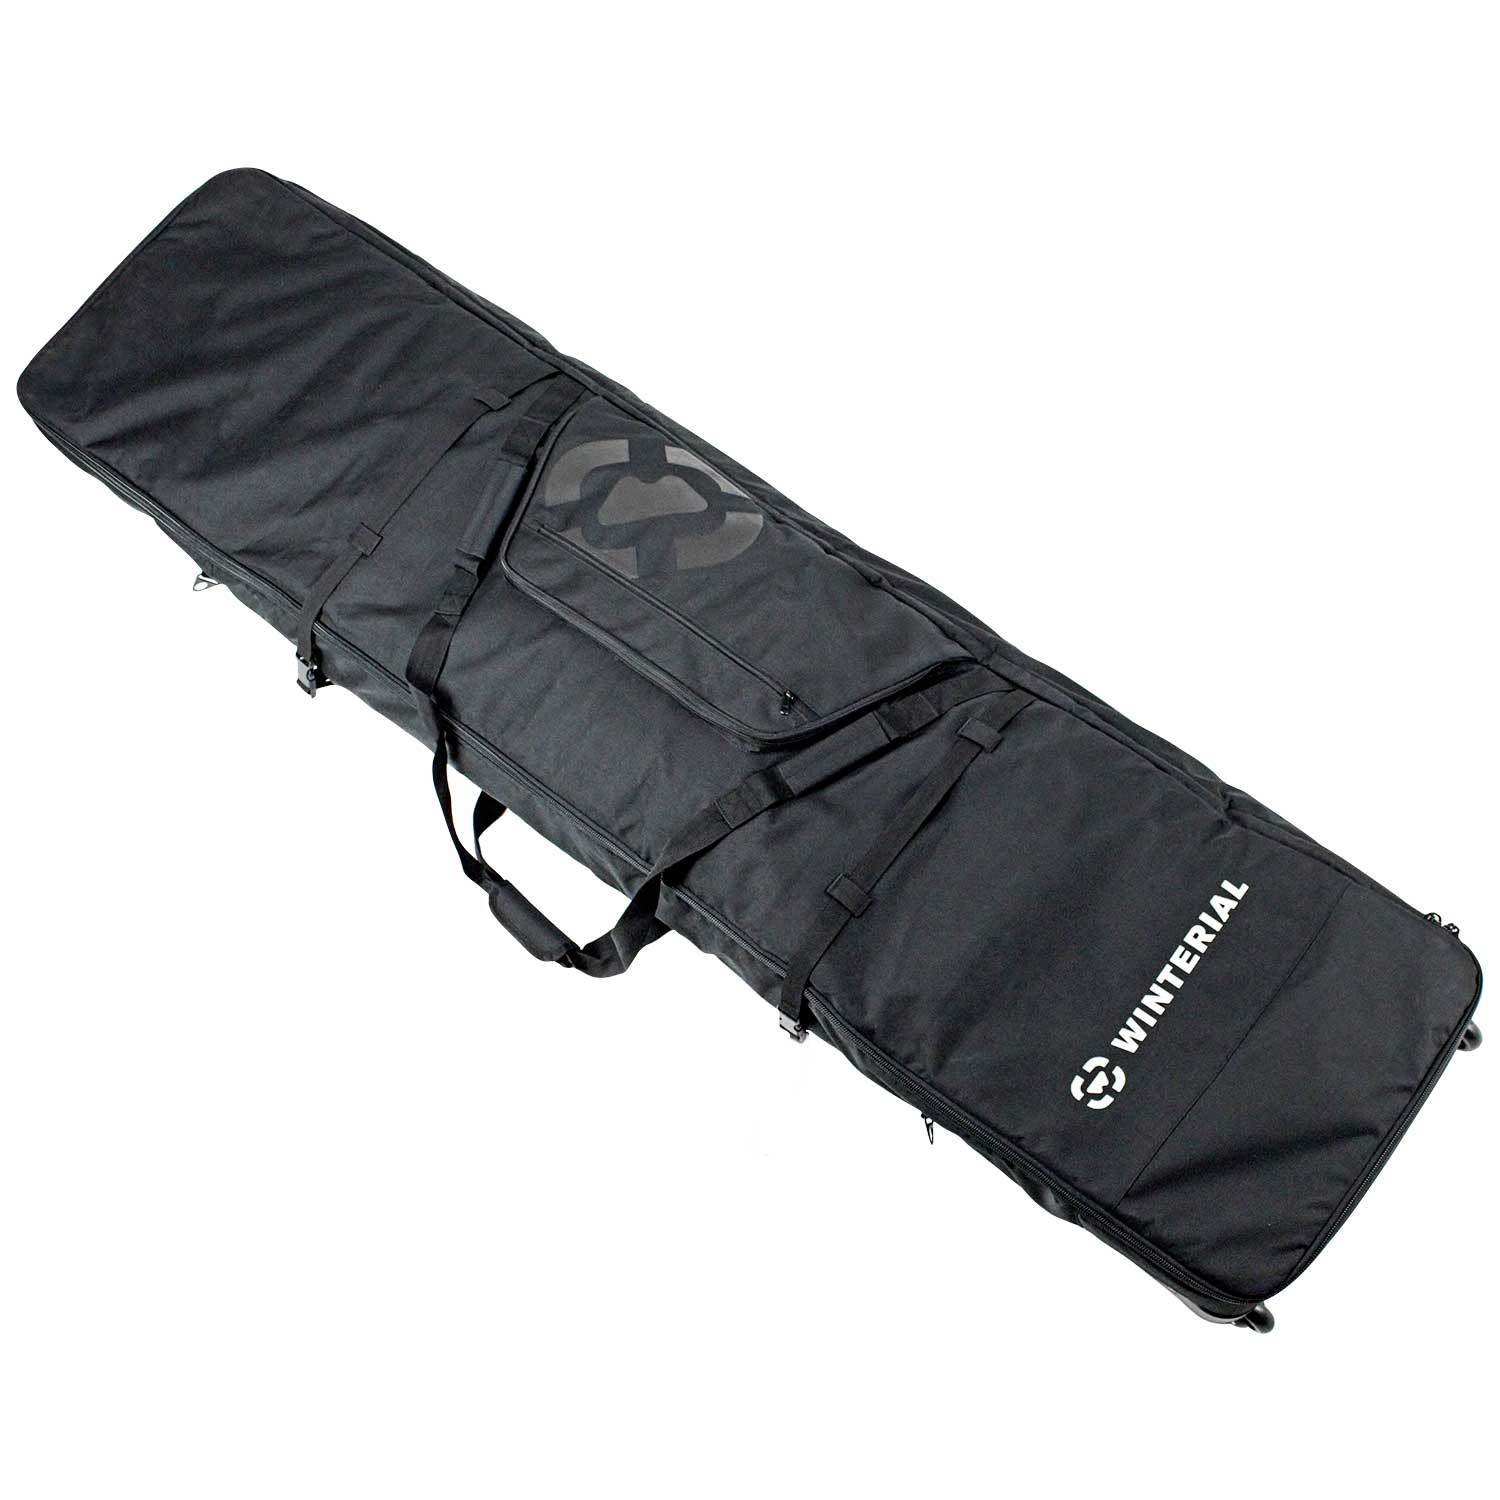 Double Ski Storage Bag I Wheeled Ski Travel Bag With 5 Storage Compartments  I Reinforced Double Padding